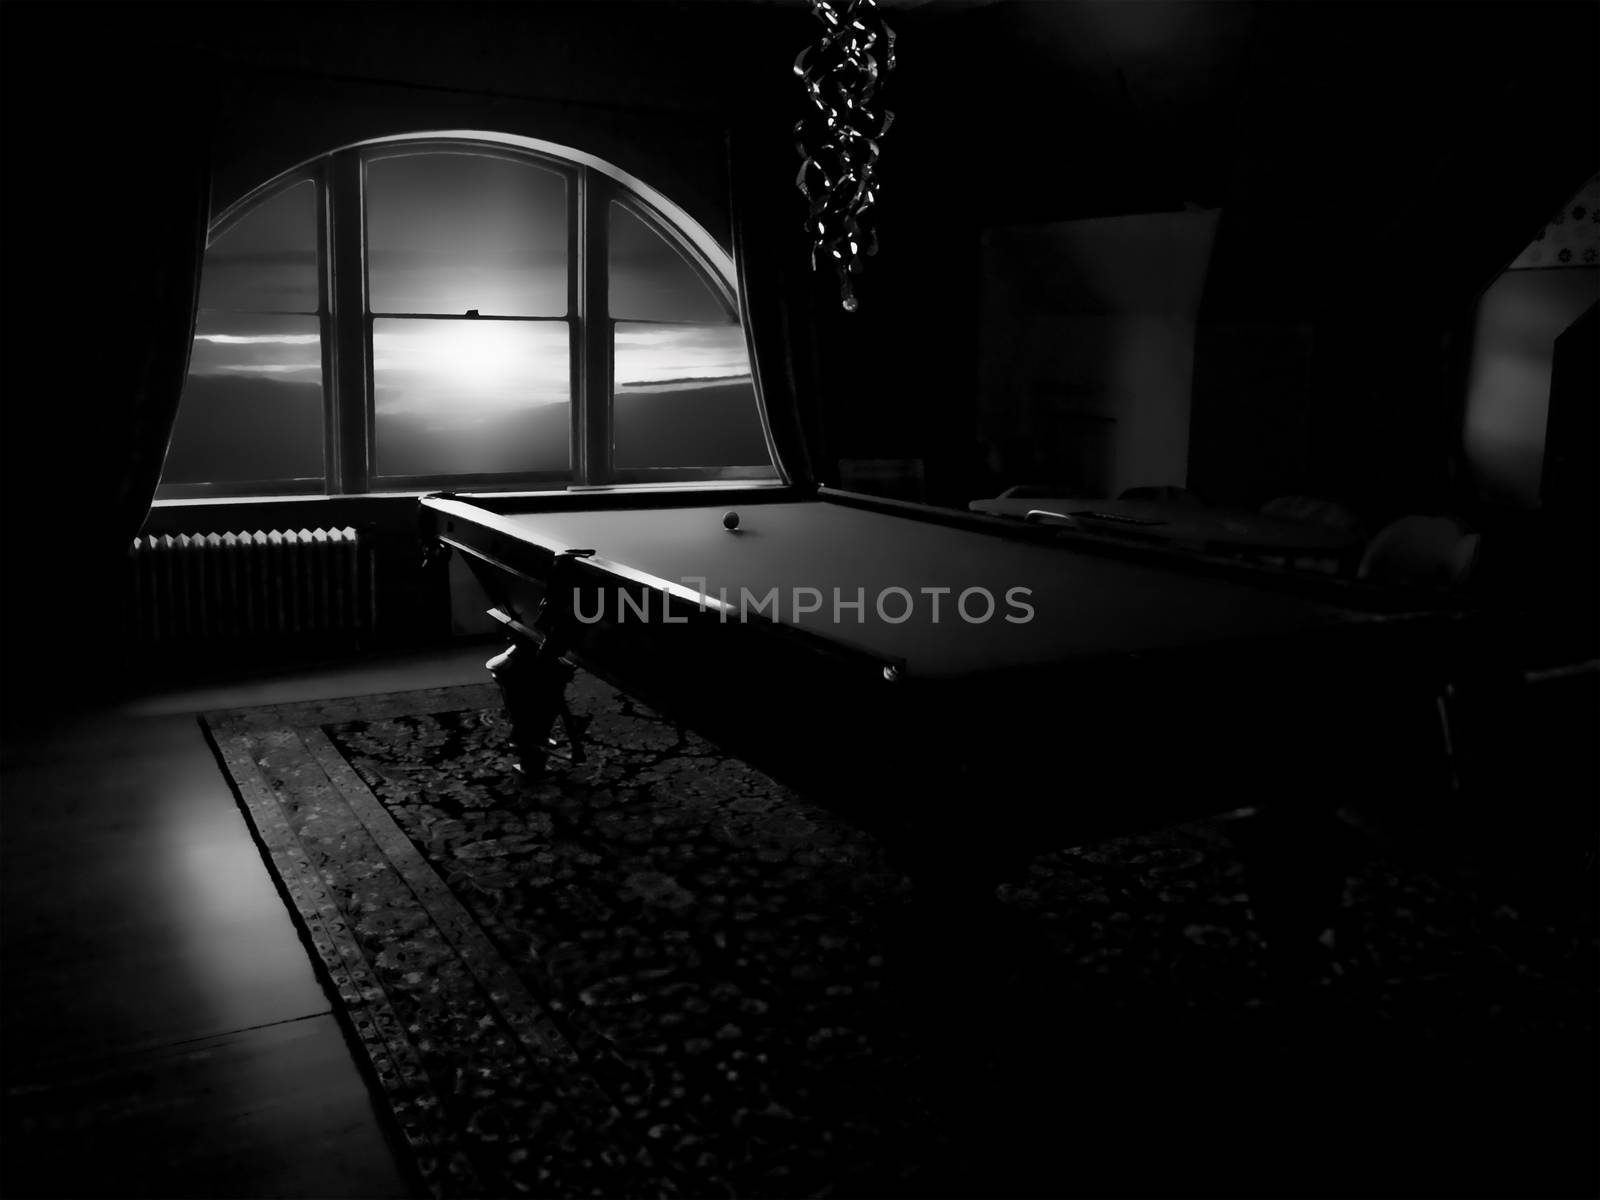 billiard room by debramillet